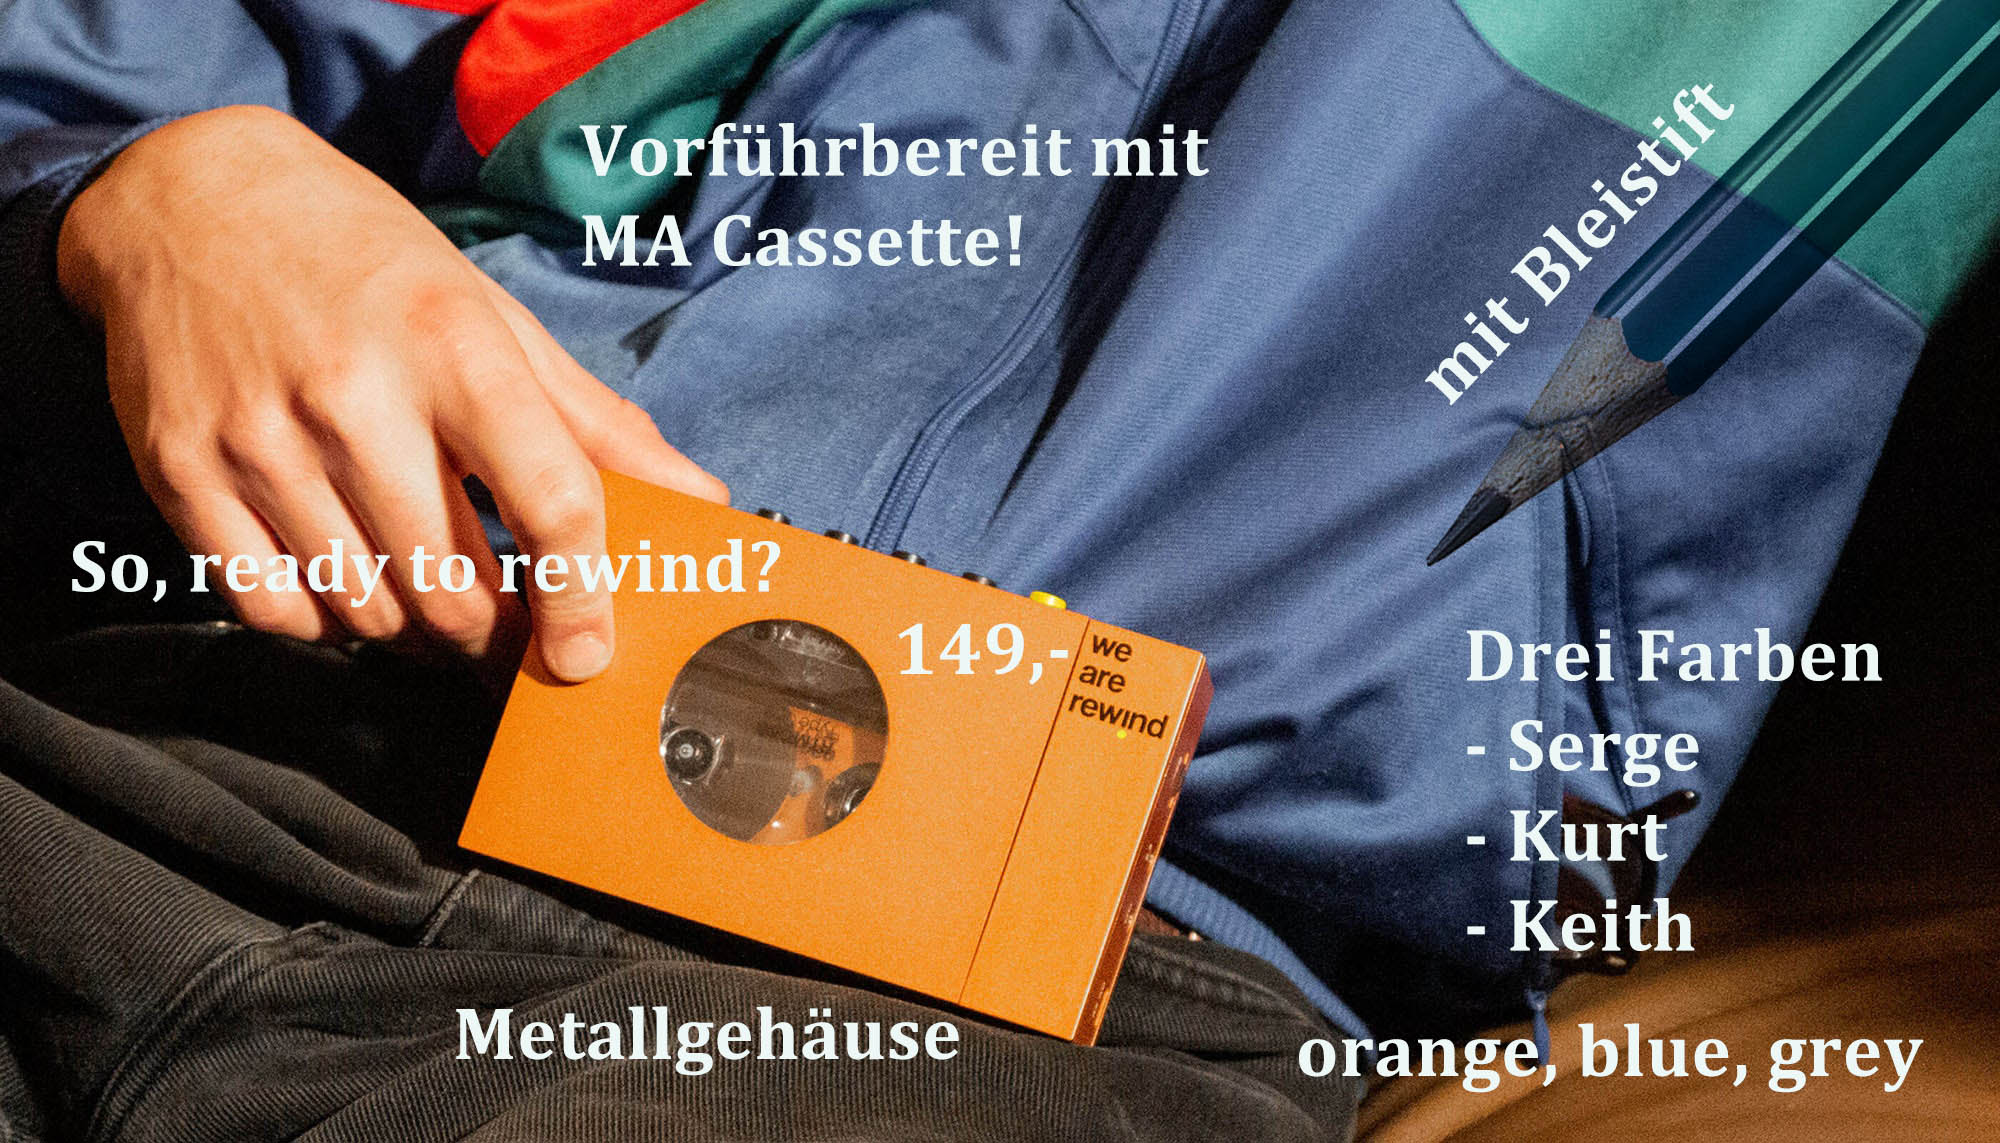 We are rewind tragbarer Cassettenrekorder